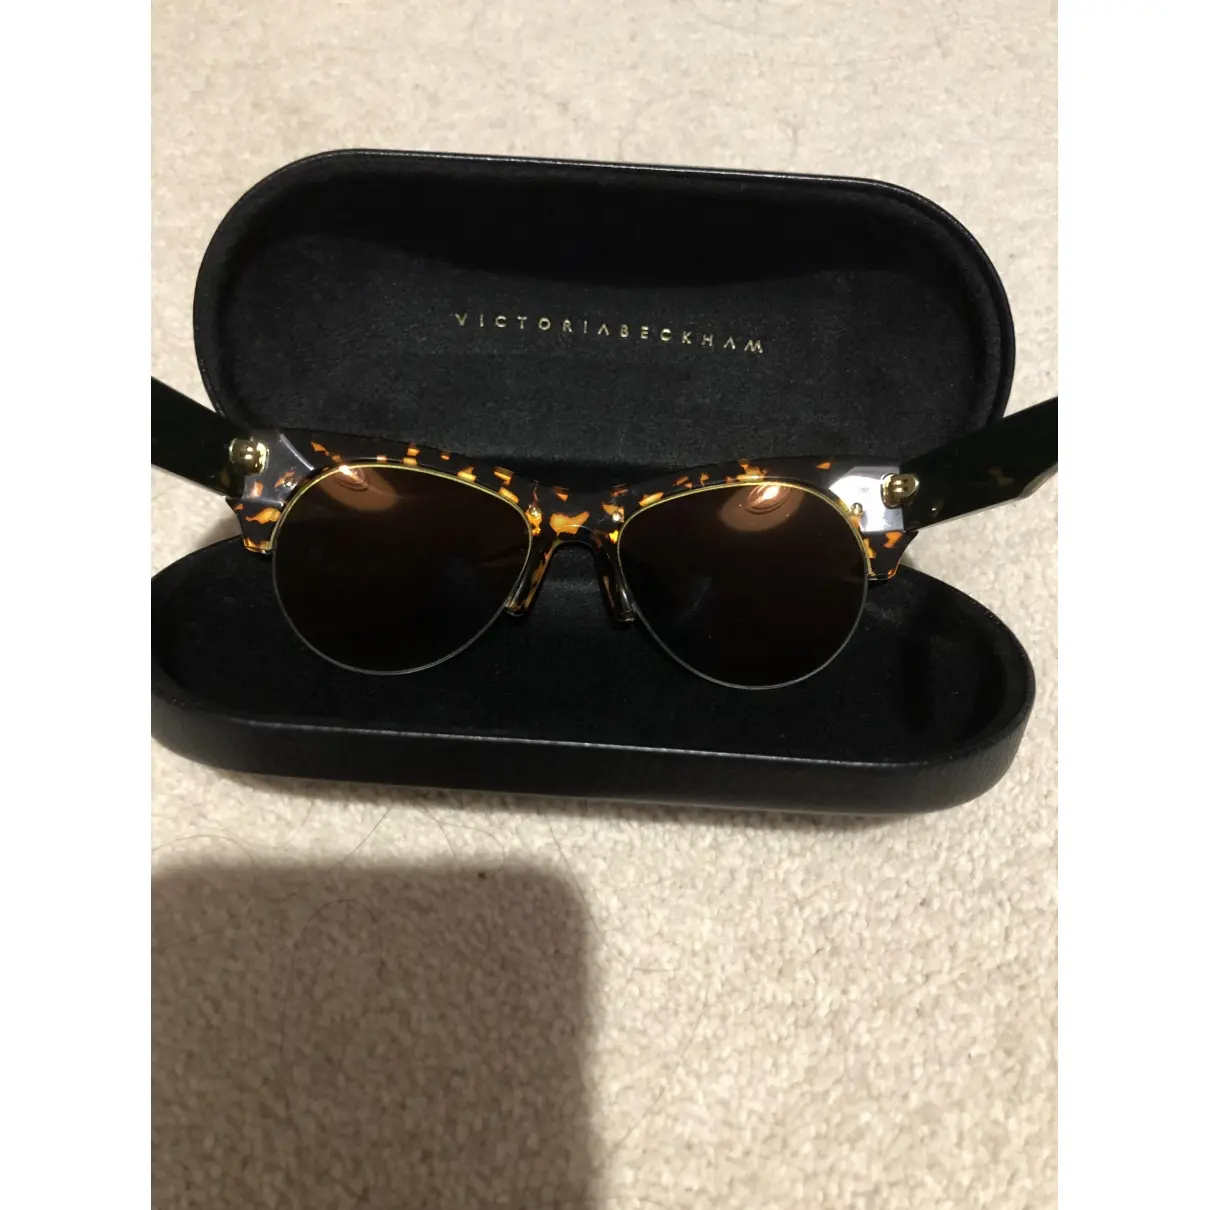 Buy Victoria Beckham Sunglasses online